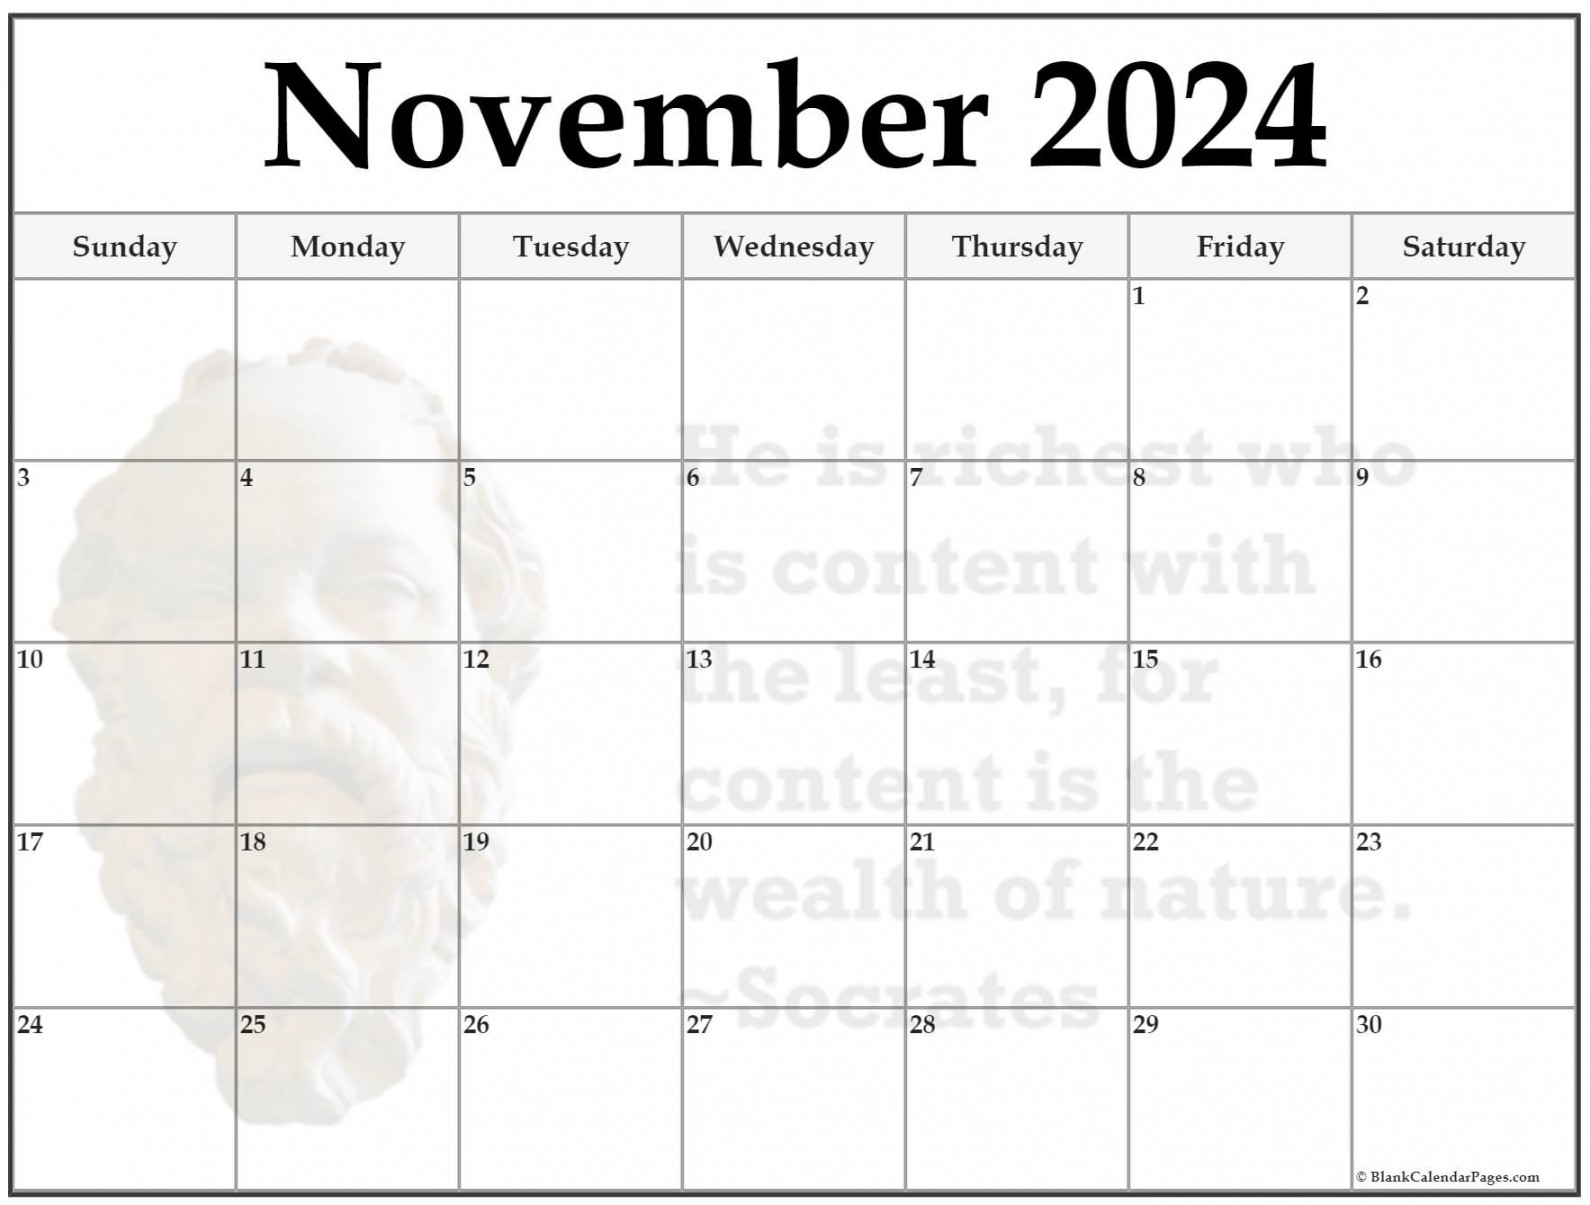 + November 20 quote calendars